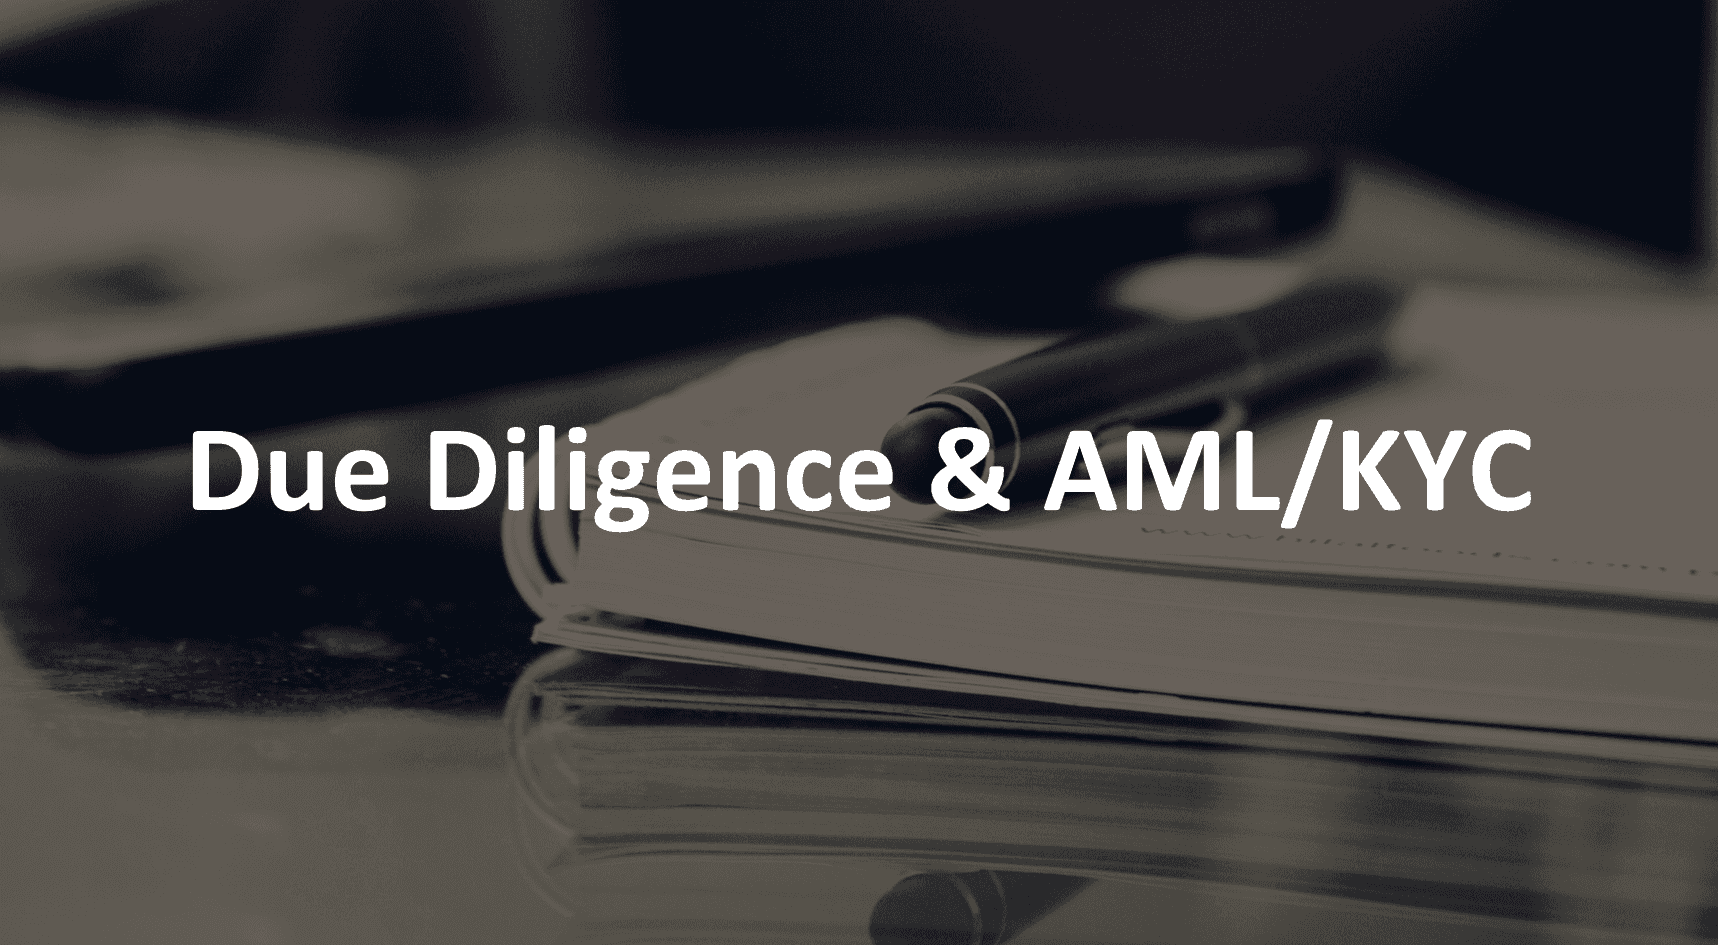 DD & AML/KYC - What Does it All Mean?